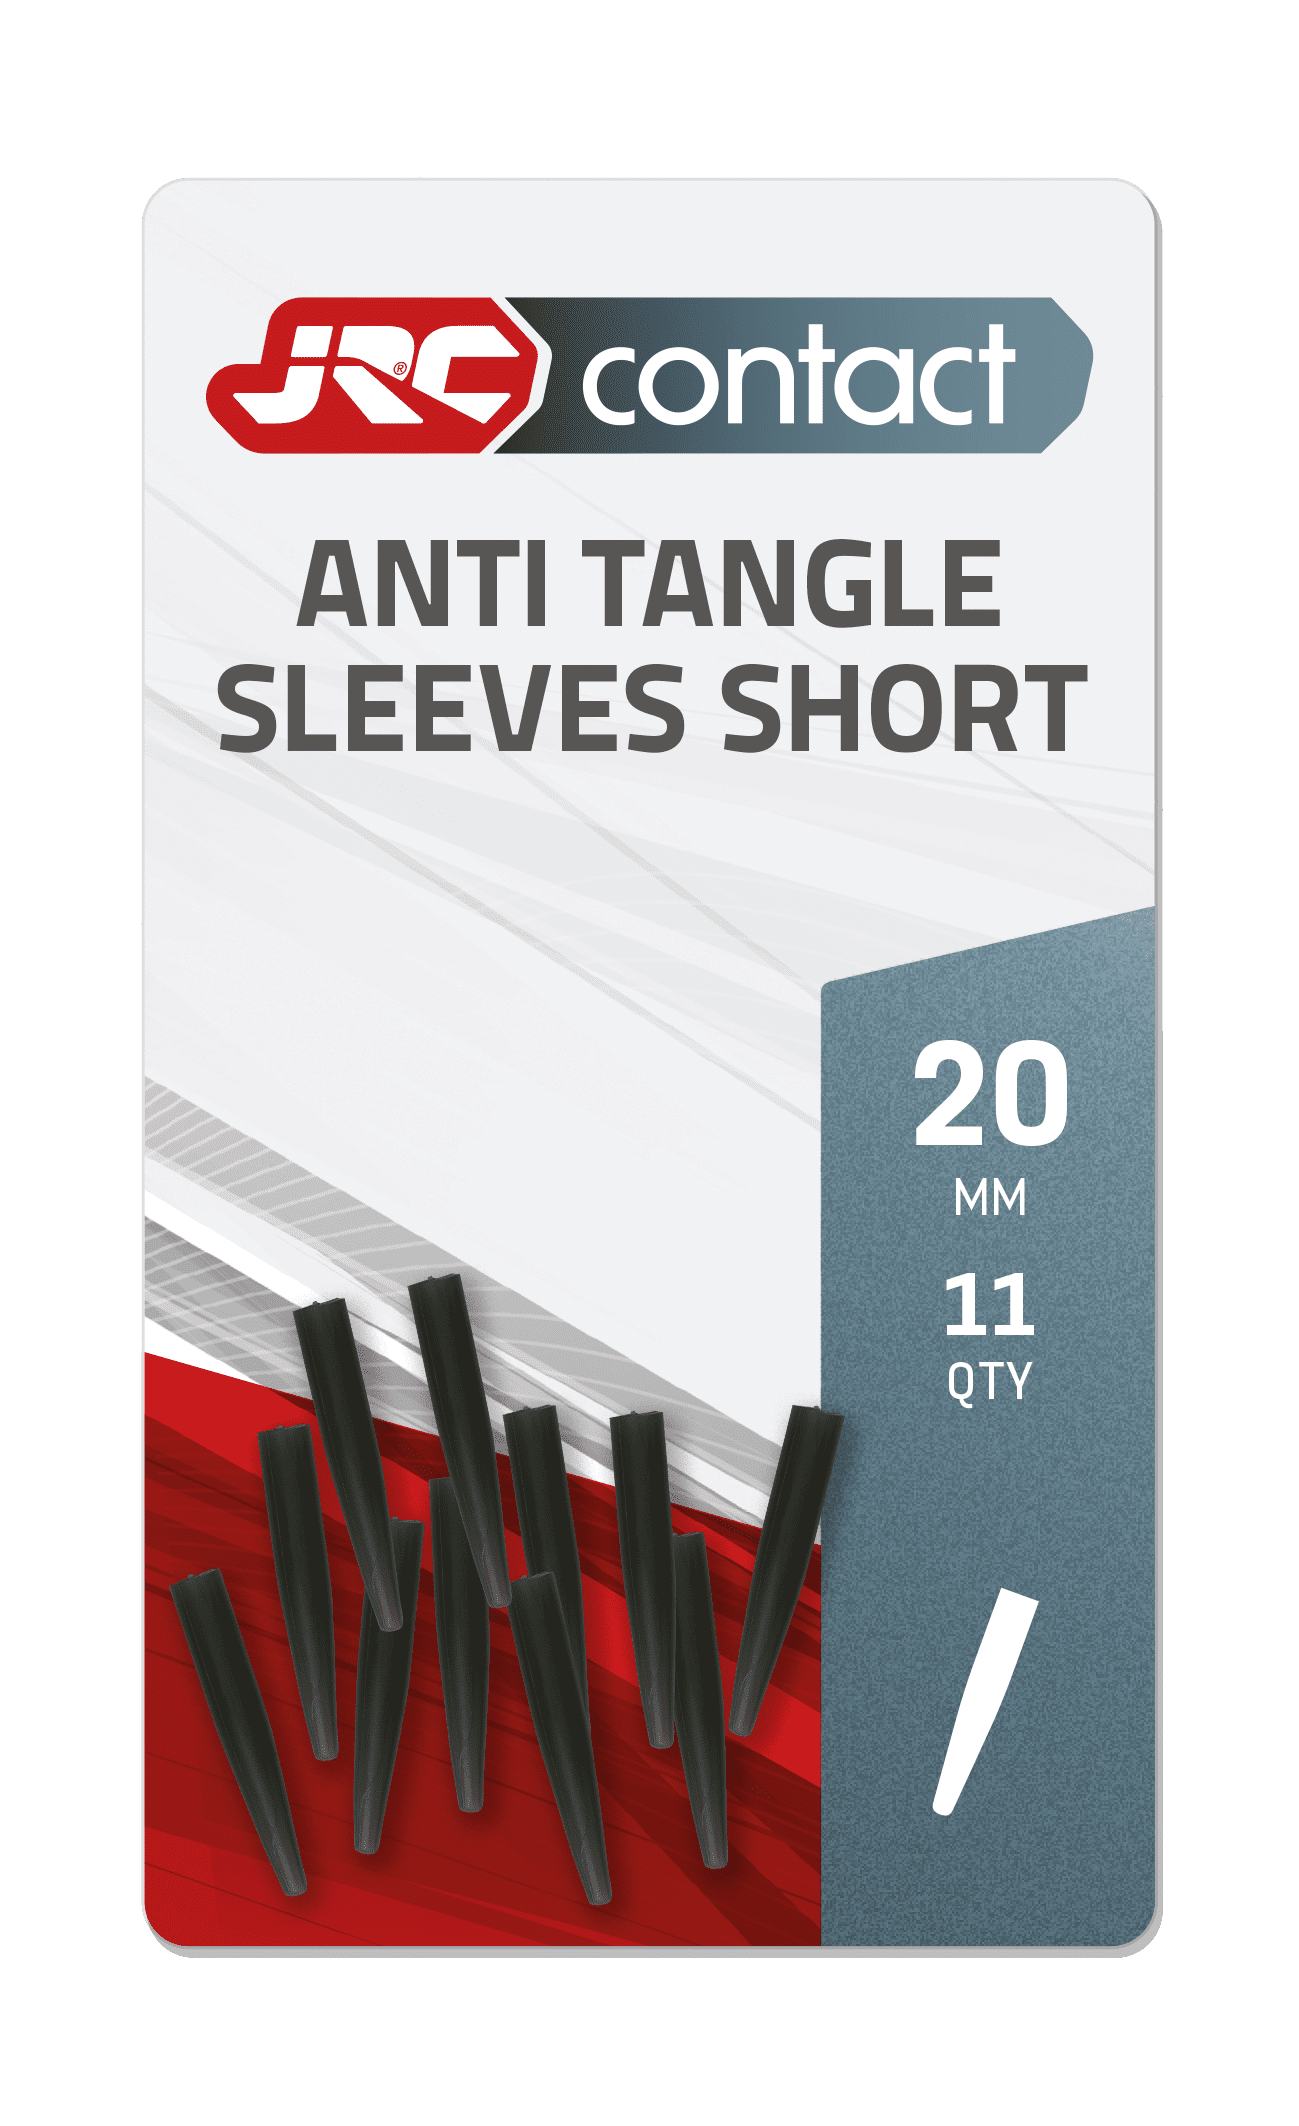 JRC Contact Anti Tangle Sleeves Short 20mm